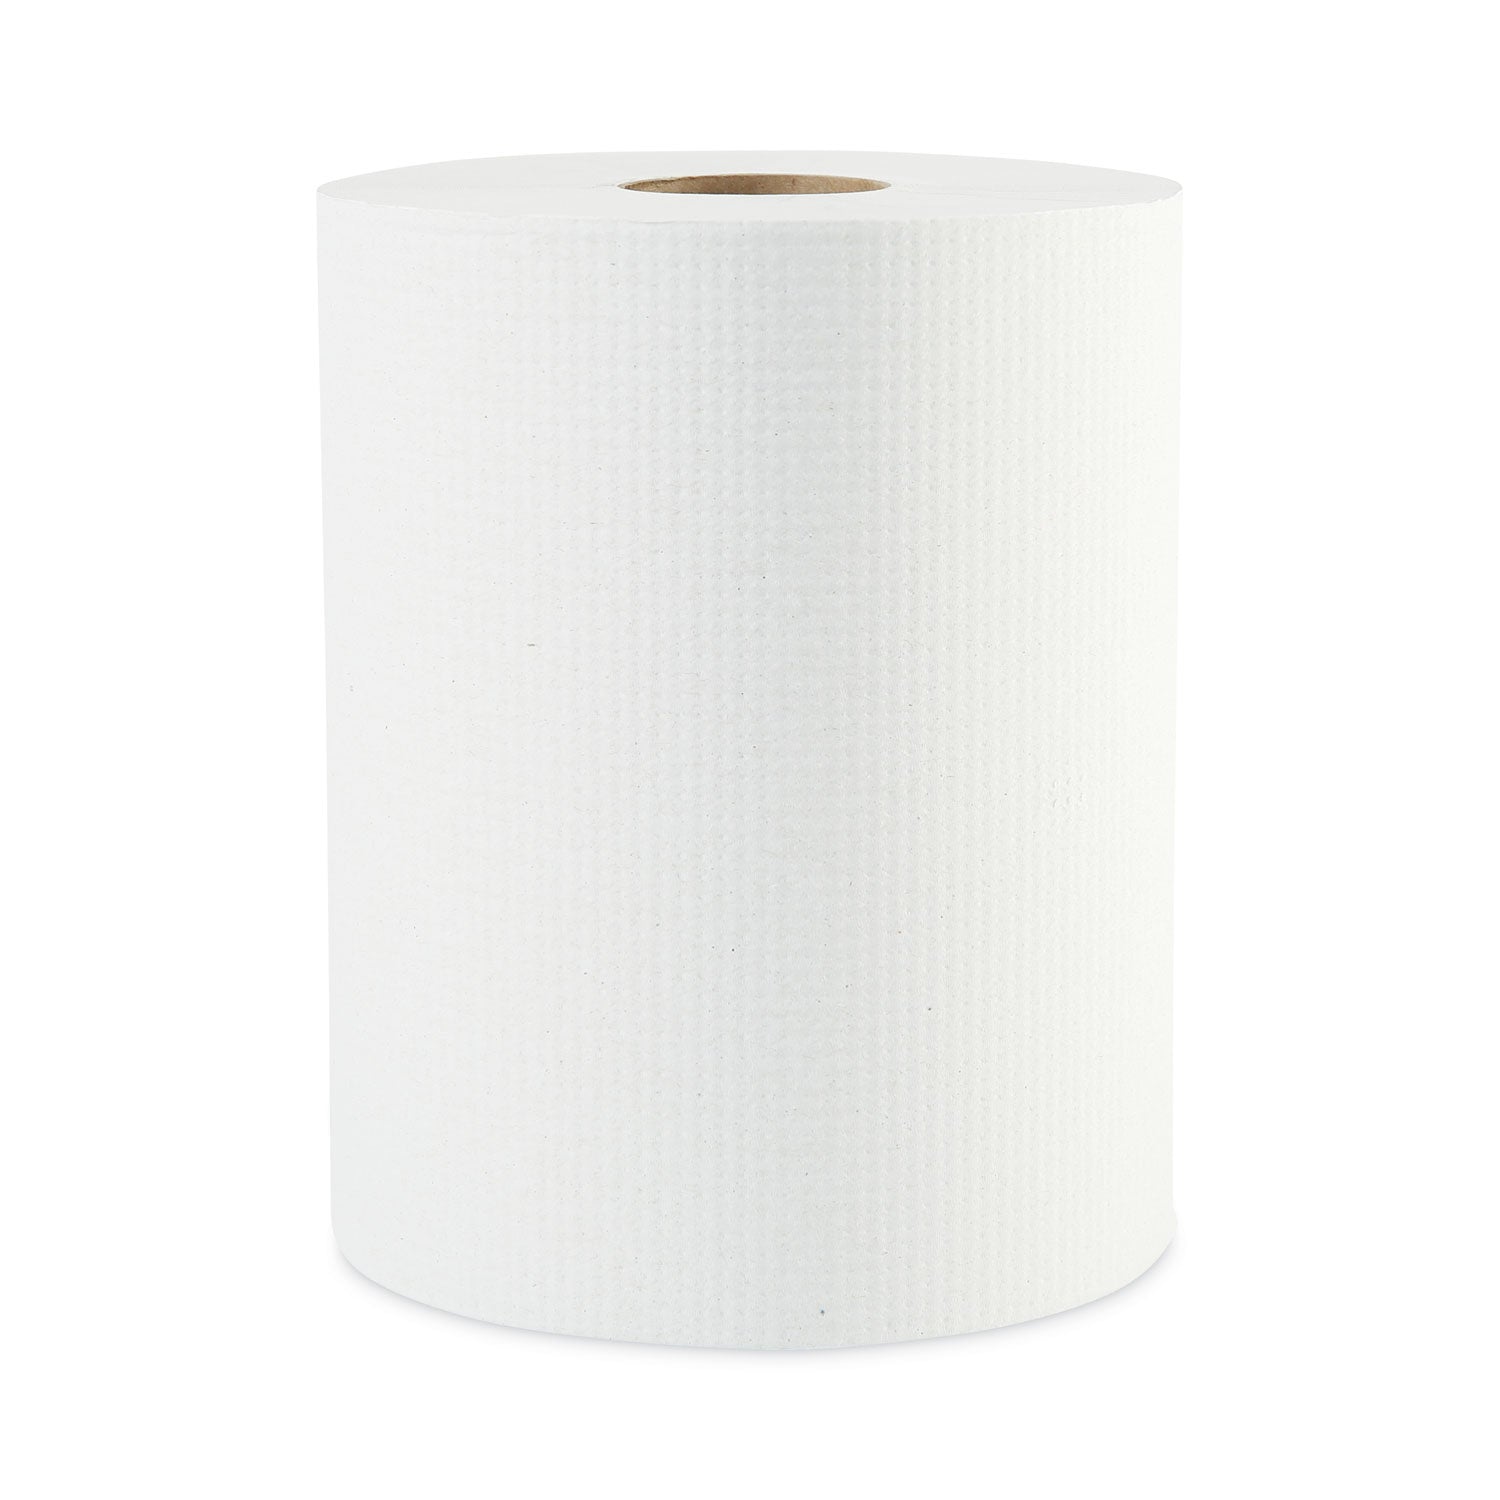 hardwound-paper-towels-1-ply-8-x-600-ft-white-2-core-12-rolls-carton_bwk6261b - 1